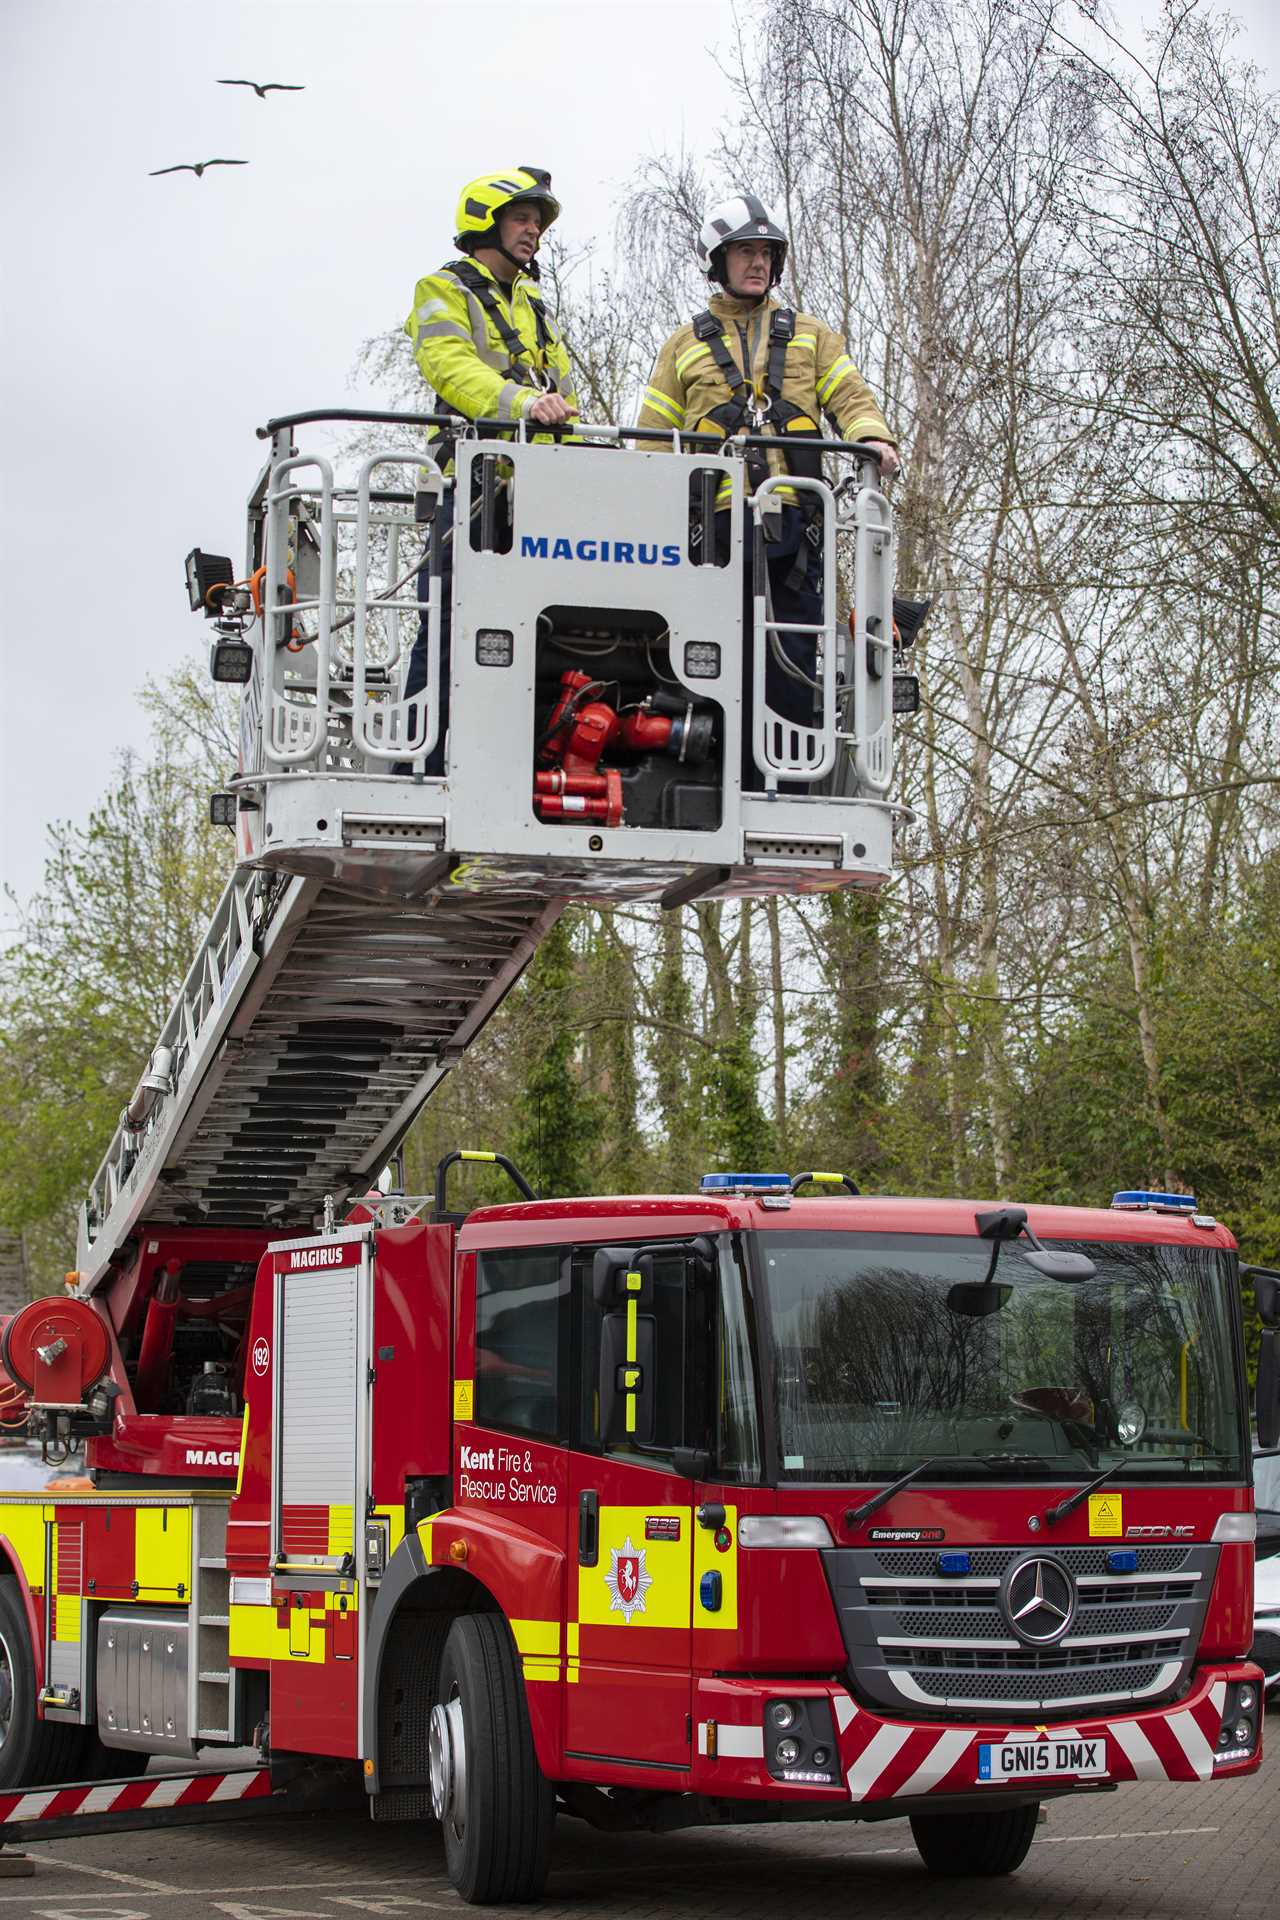 Britain will send 22 more ambulances plus fire engines to help Ukraine’s hard-hit hospitals